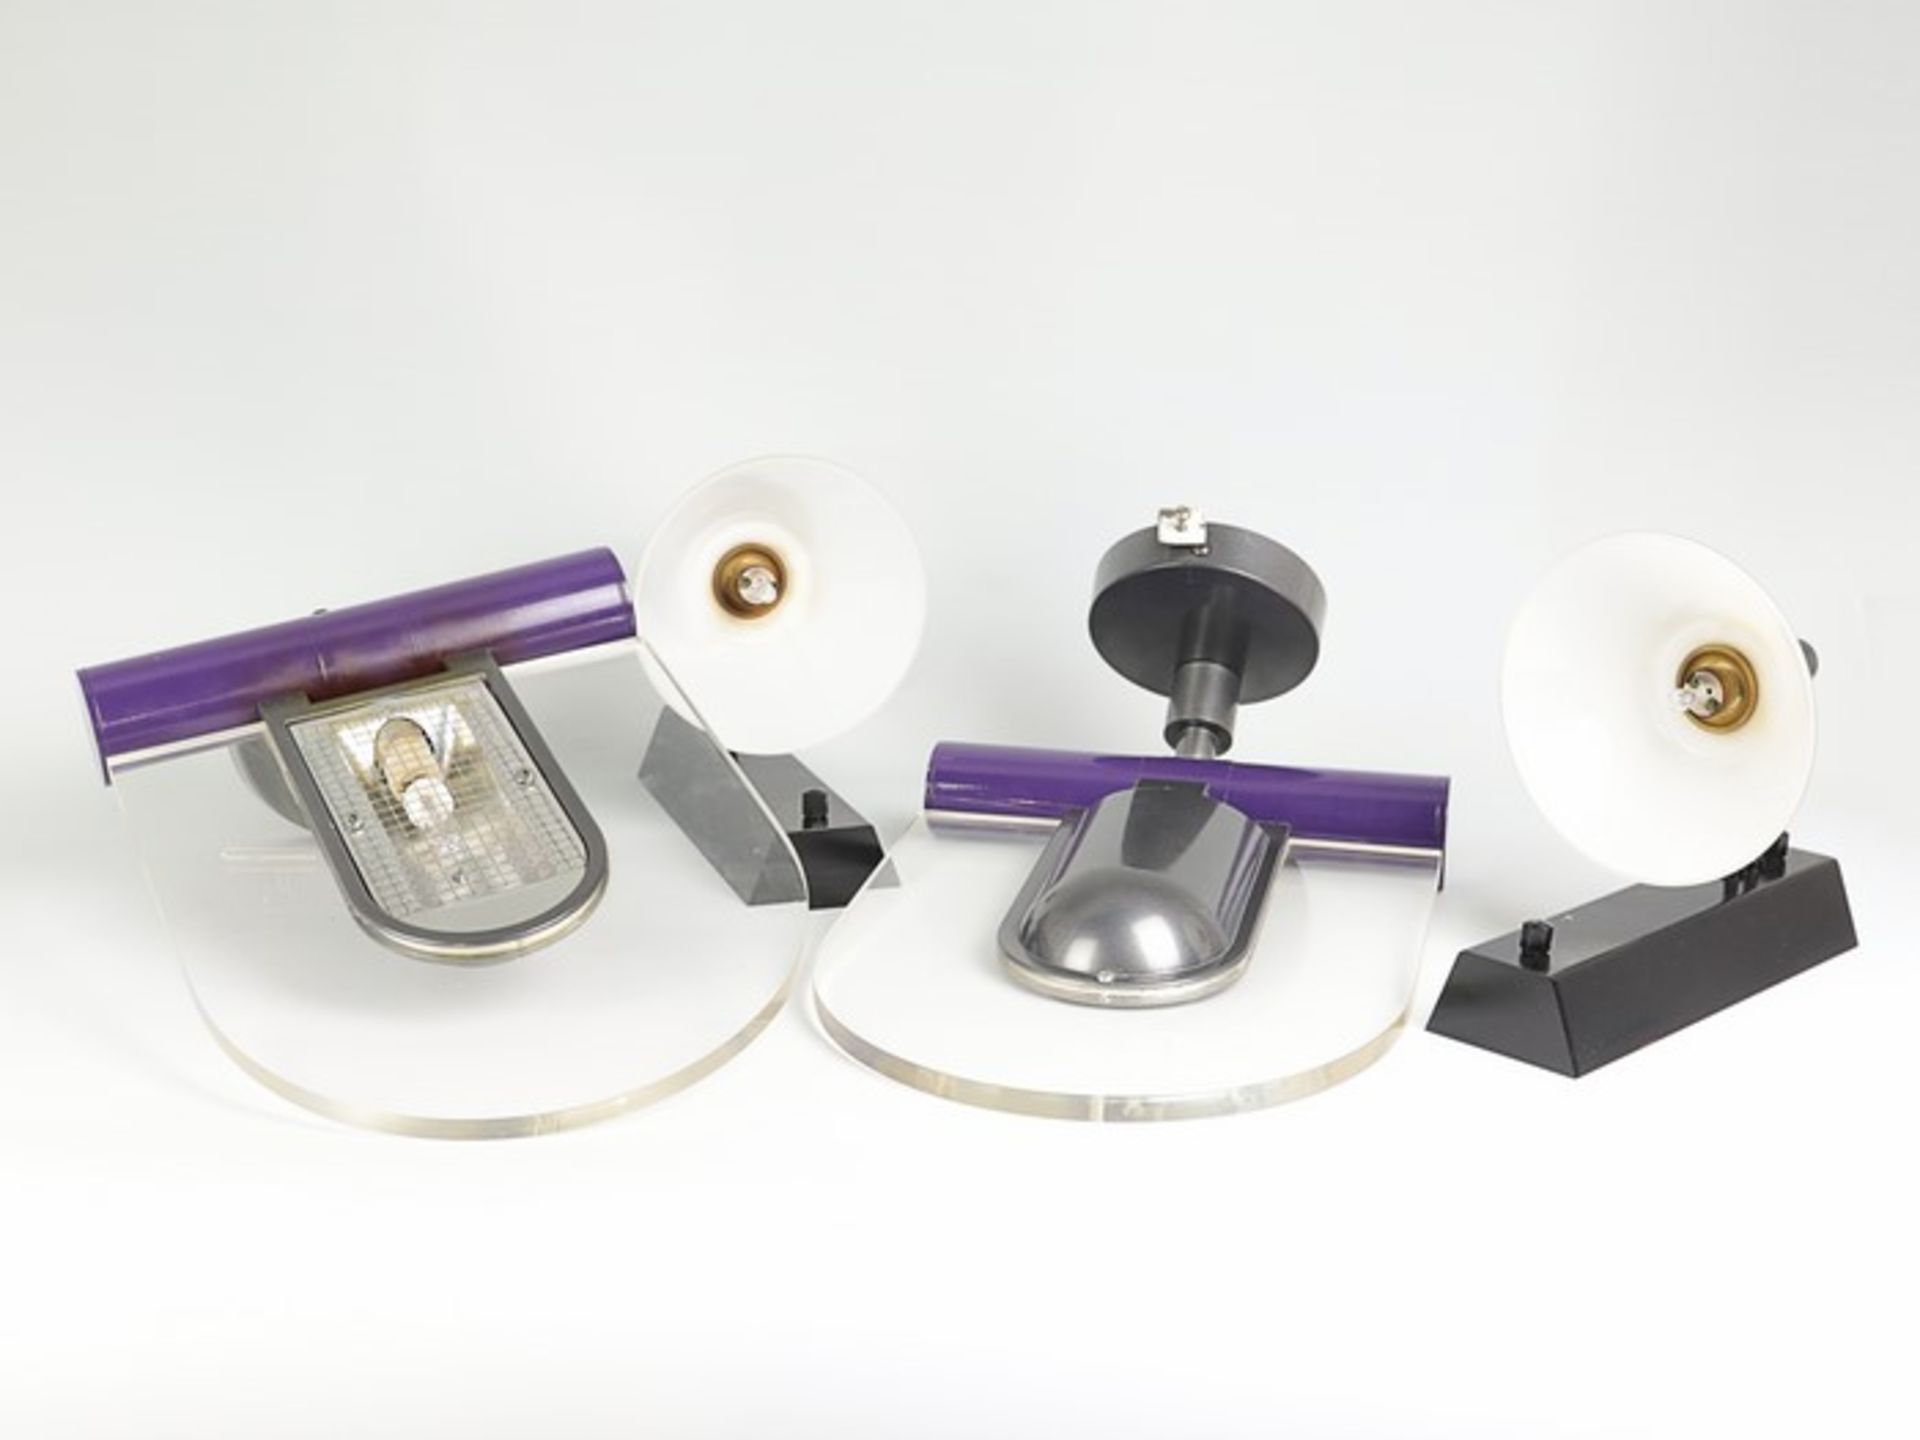 Wandlampen5 St., Metall/(Acryl-)Glas, schwarz, violett u. silberfarben lackiert, 1-flammig, 3x